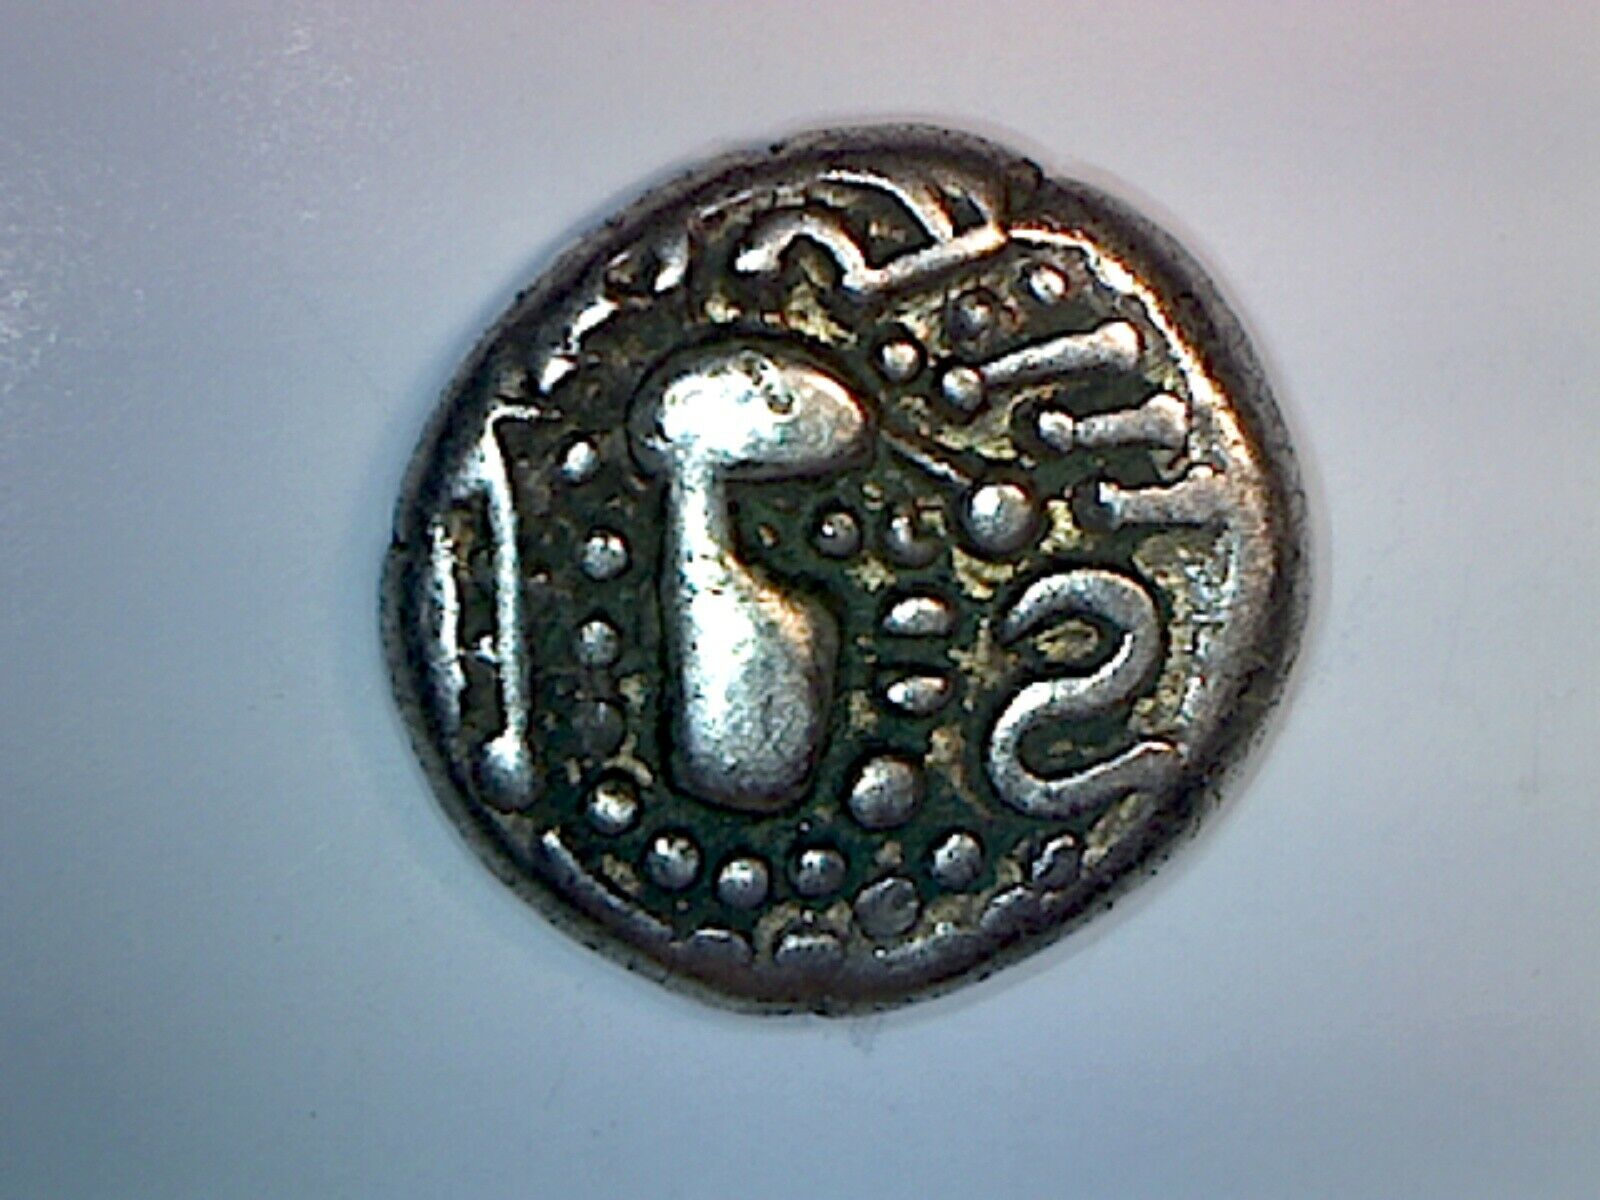 Vintage India Silver Coin?